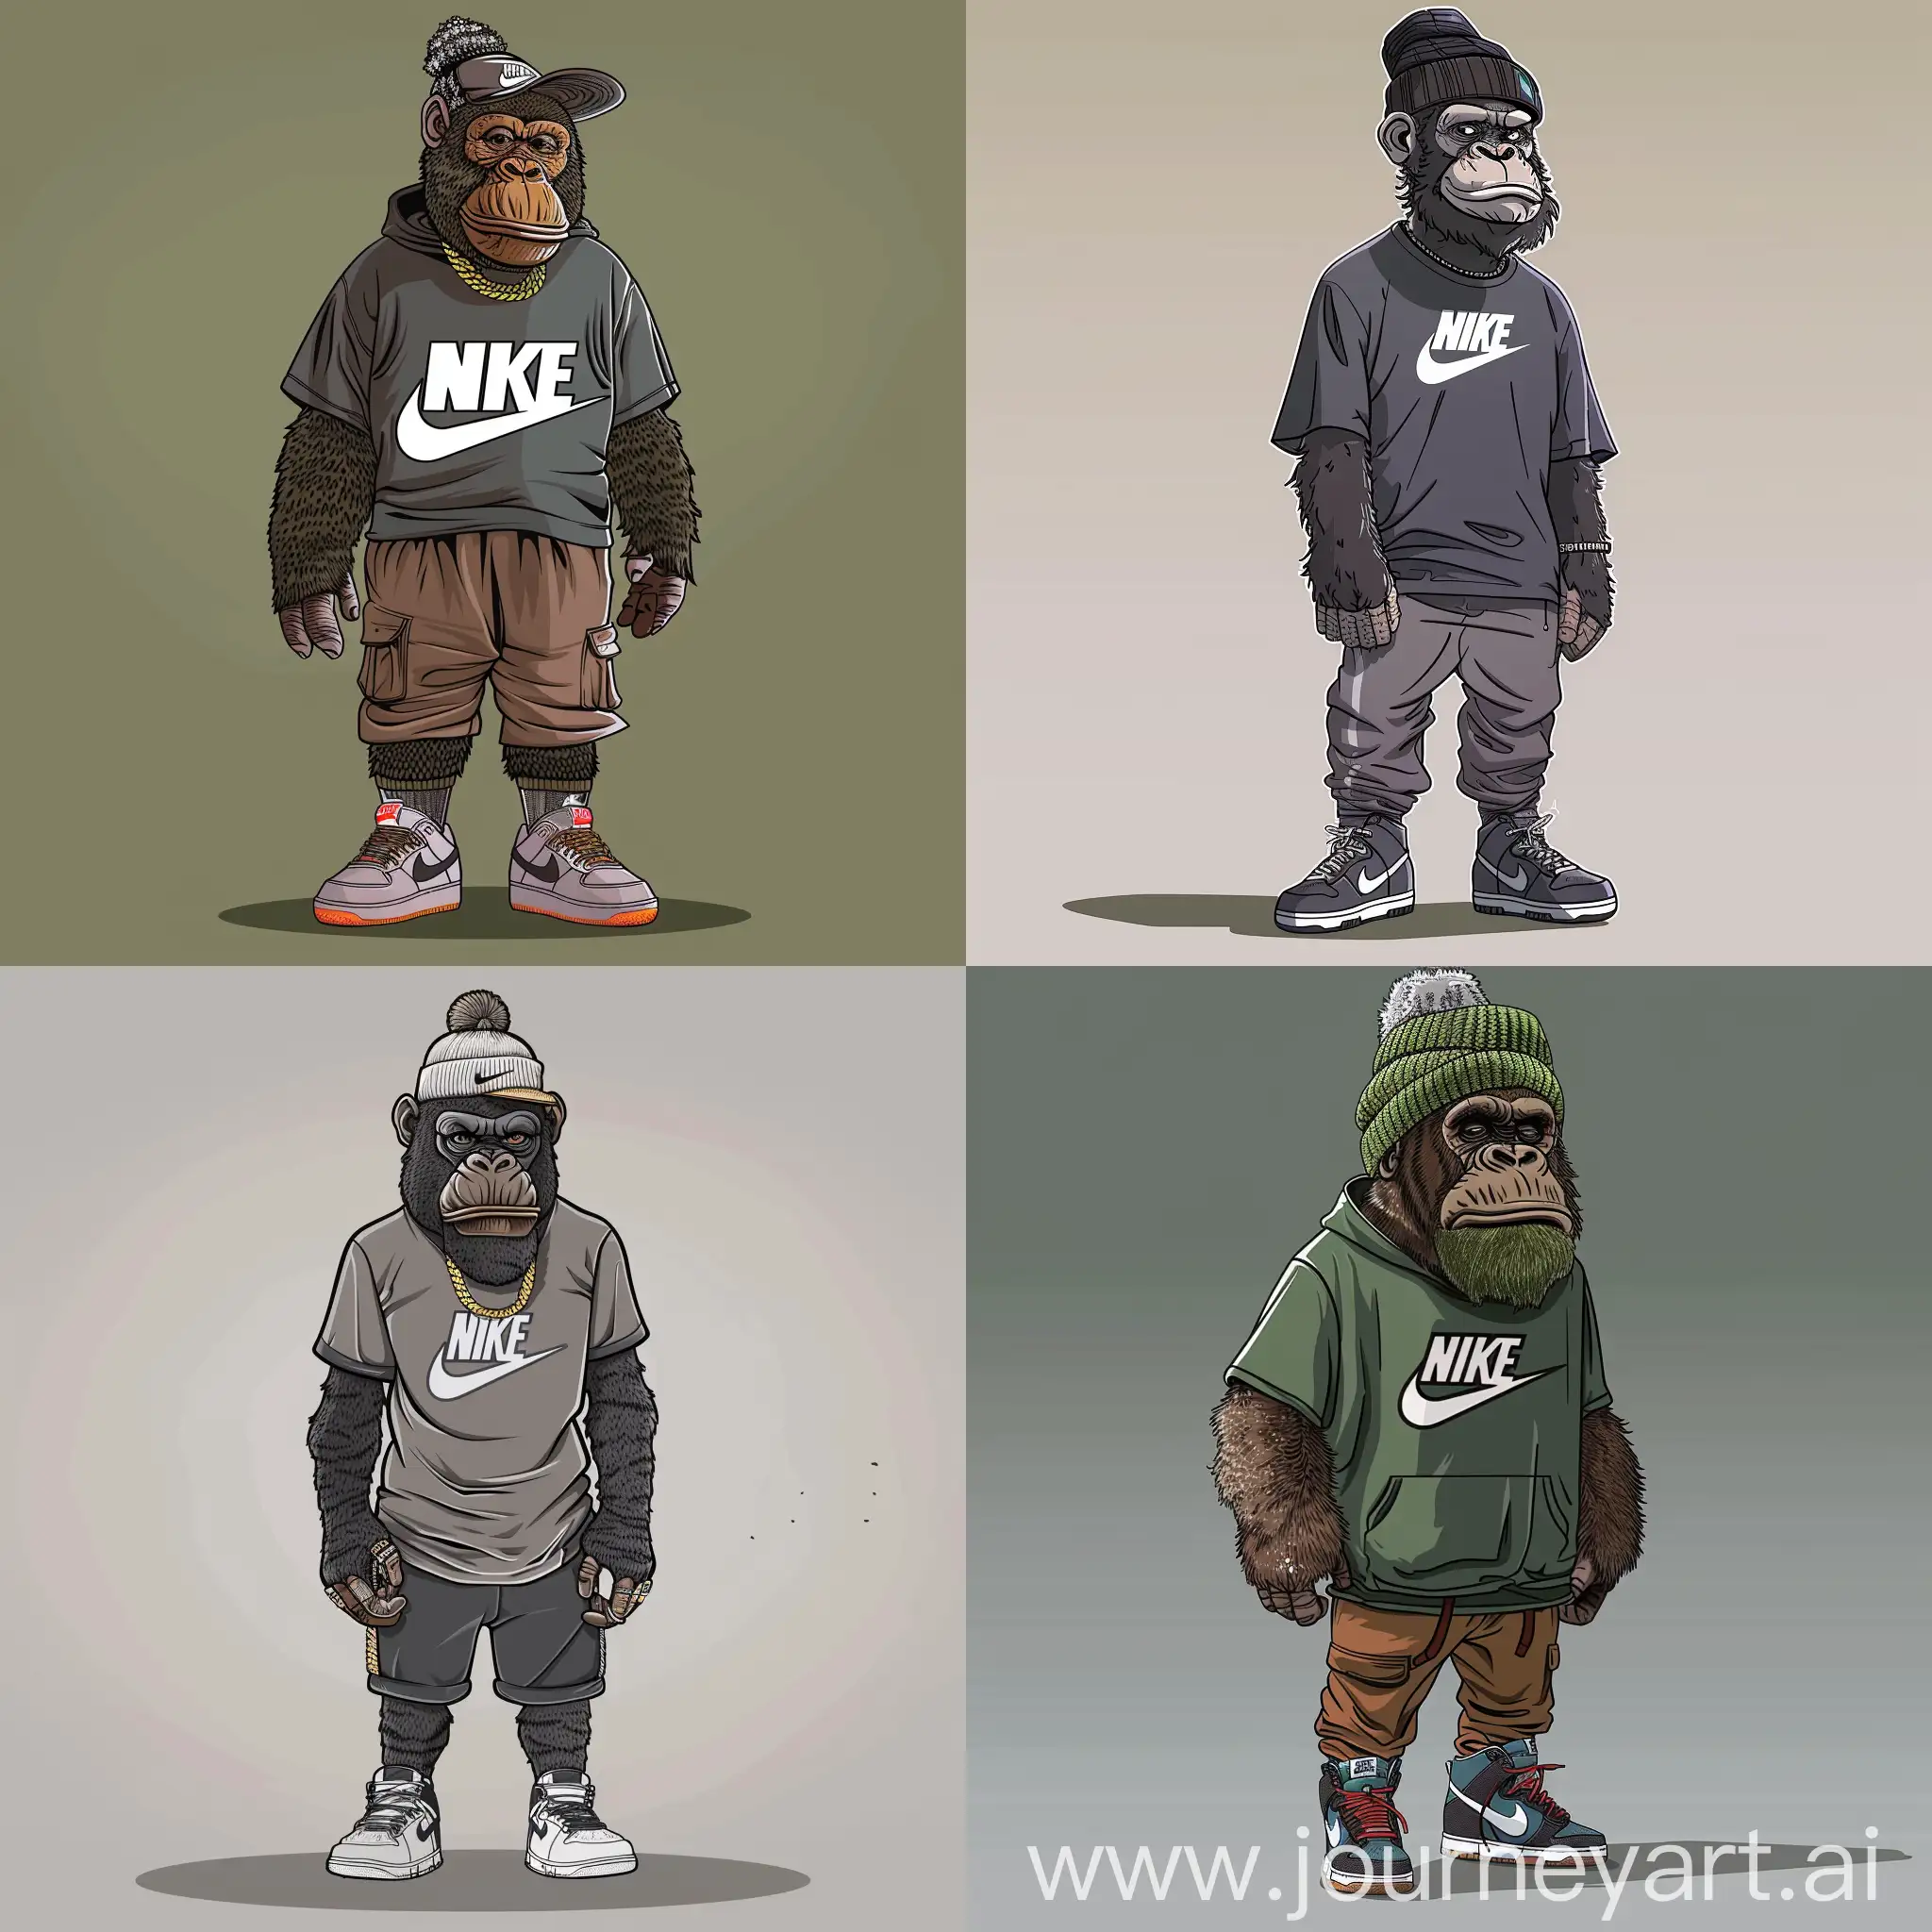 Cool-Cartoon-Kong-in-Nike-Gear-HipHop-Style-Gorilla-Art